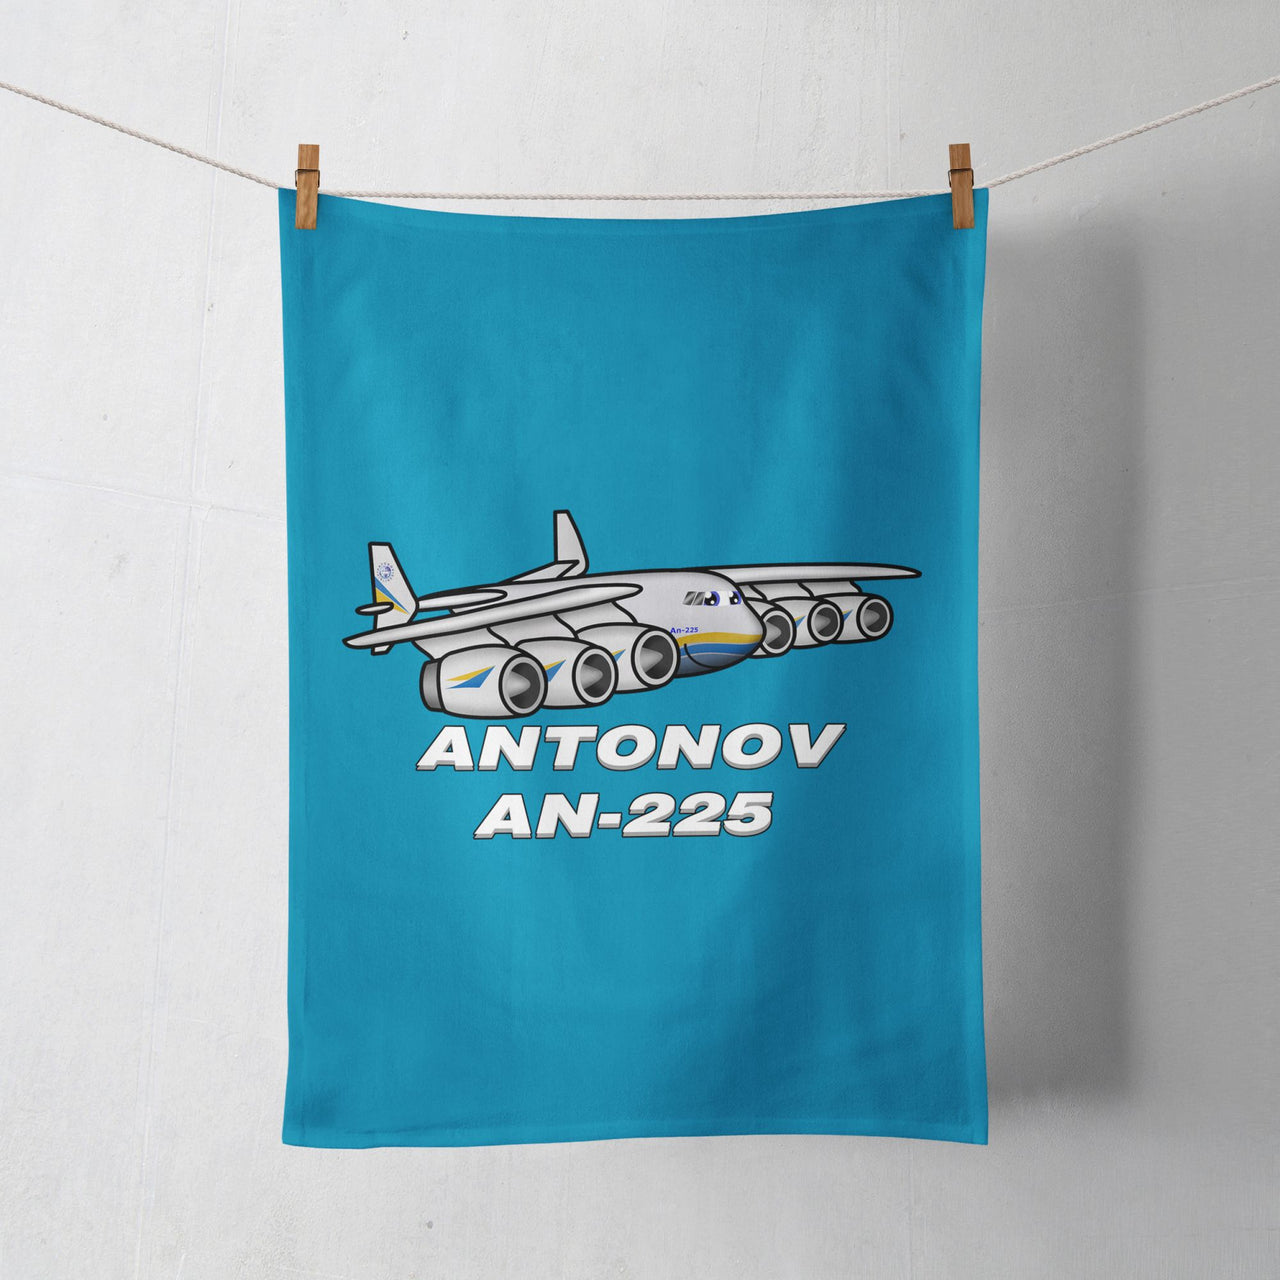 Antonov AN-225 (25) Designed Towels